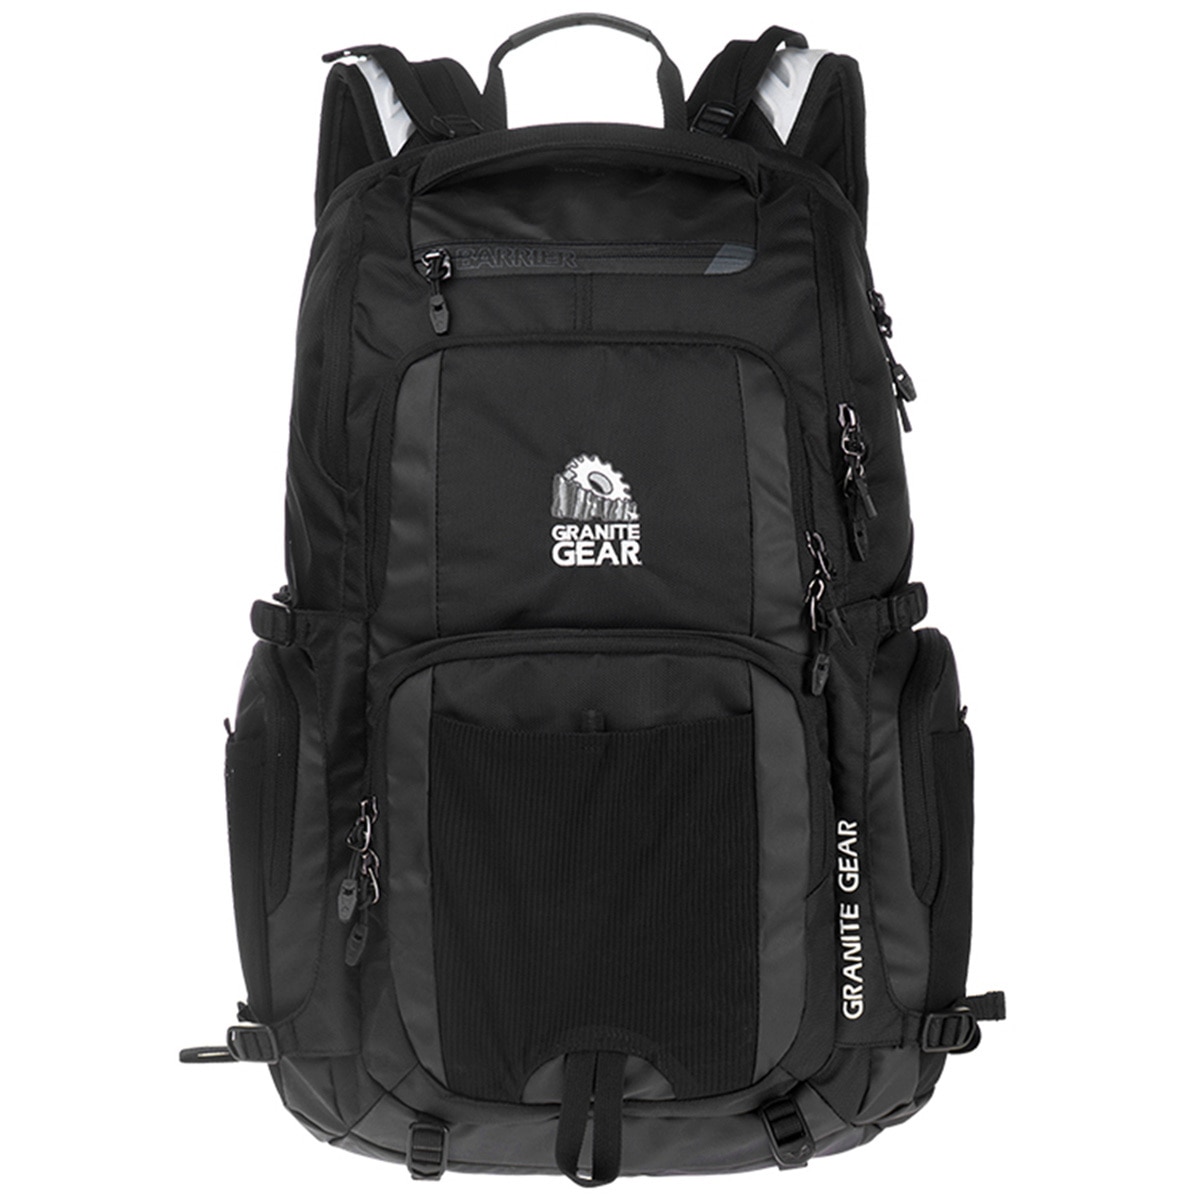 Granite Gear Hiking & Camping Backpack G1000026 - Black